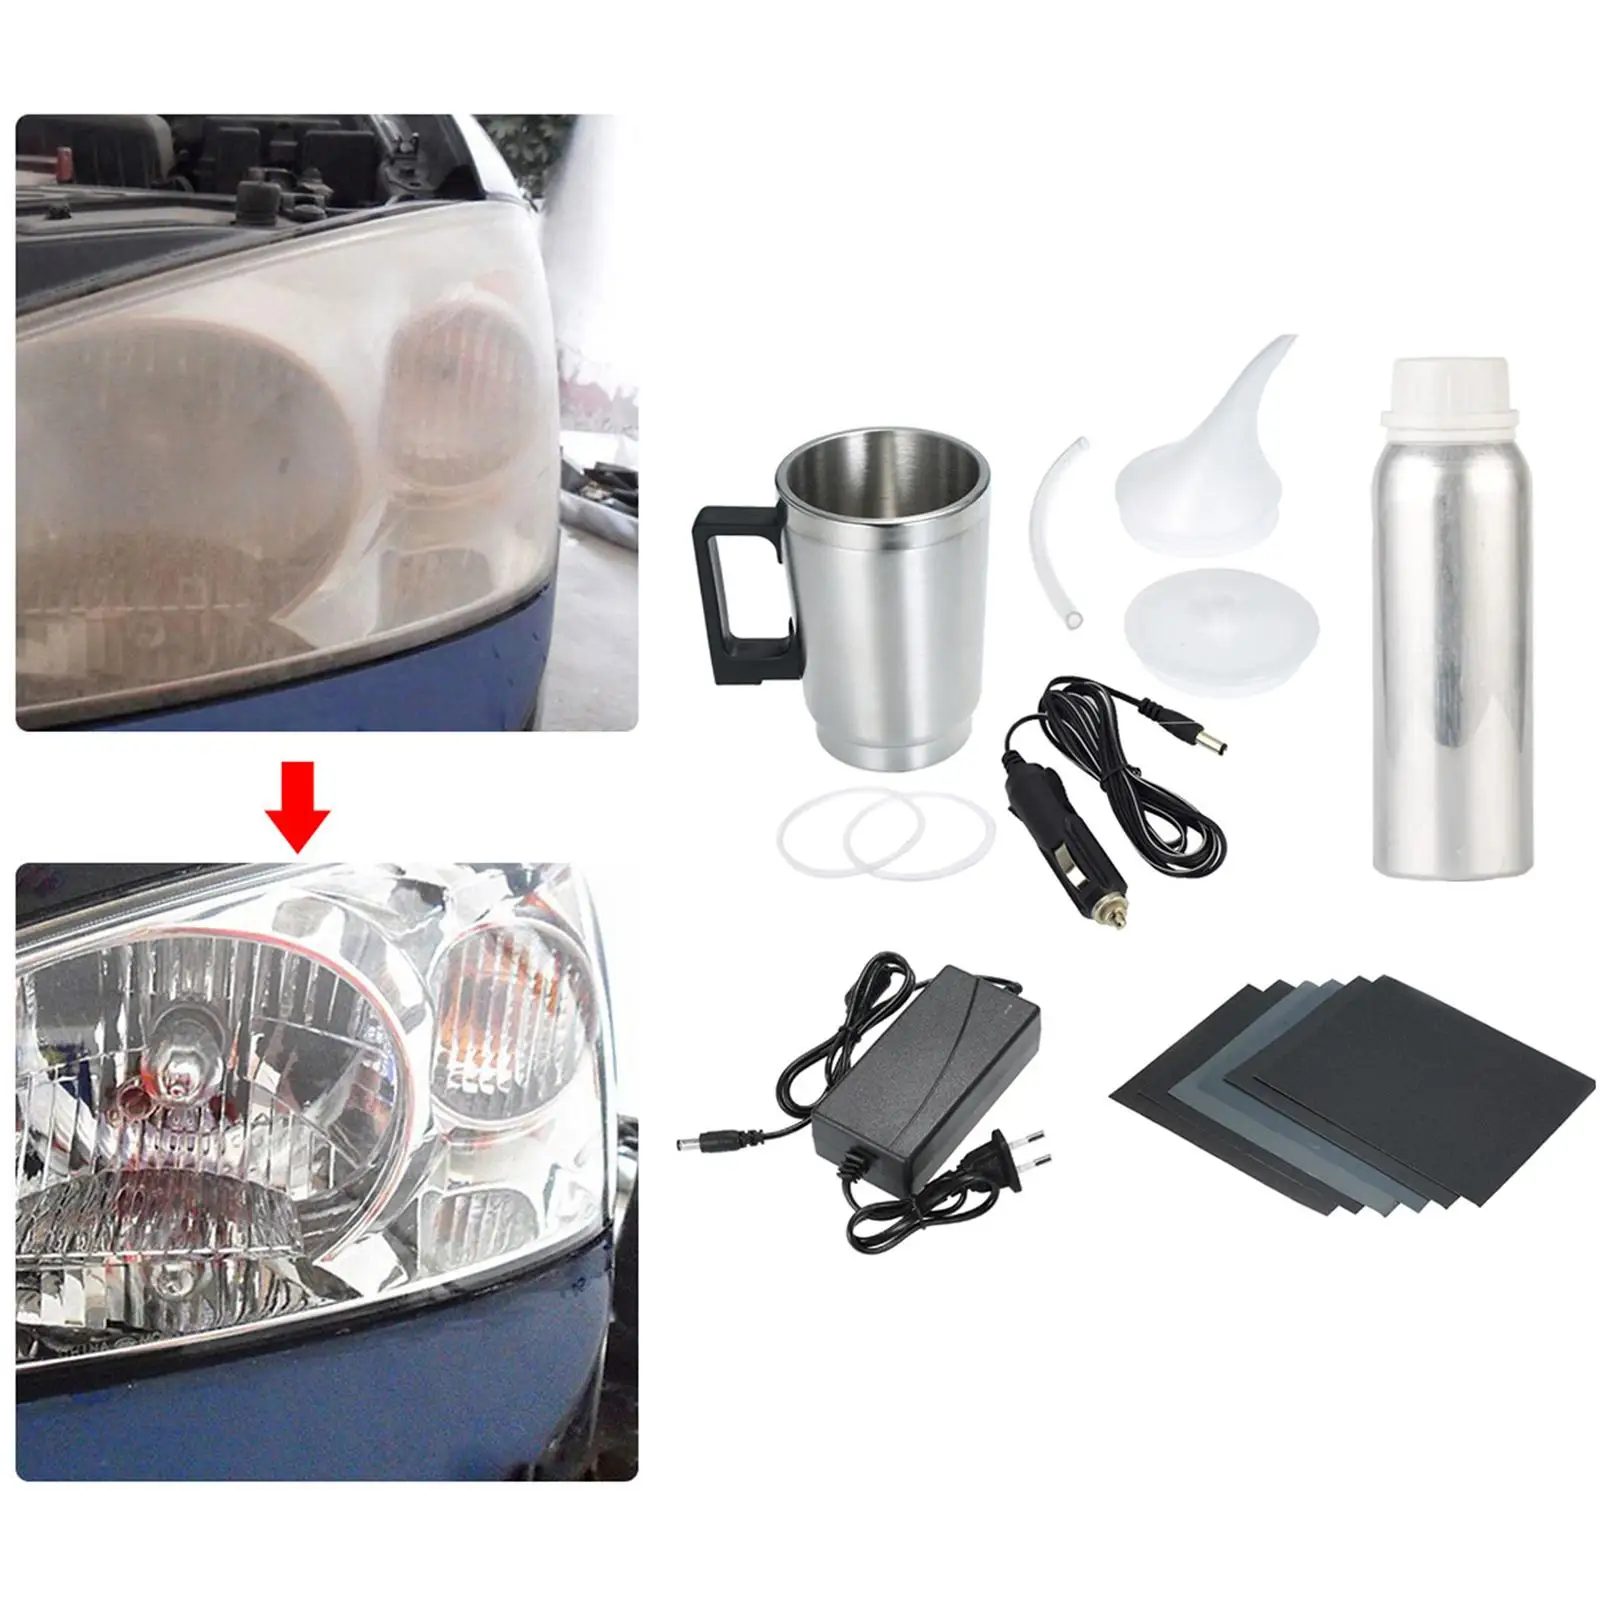 Car Headlight Renovation Kit Atomization Cup Headlight Lens Polish Repair Tool